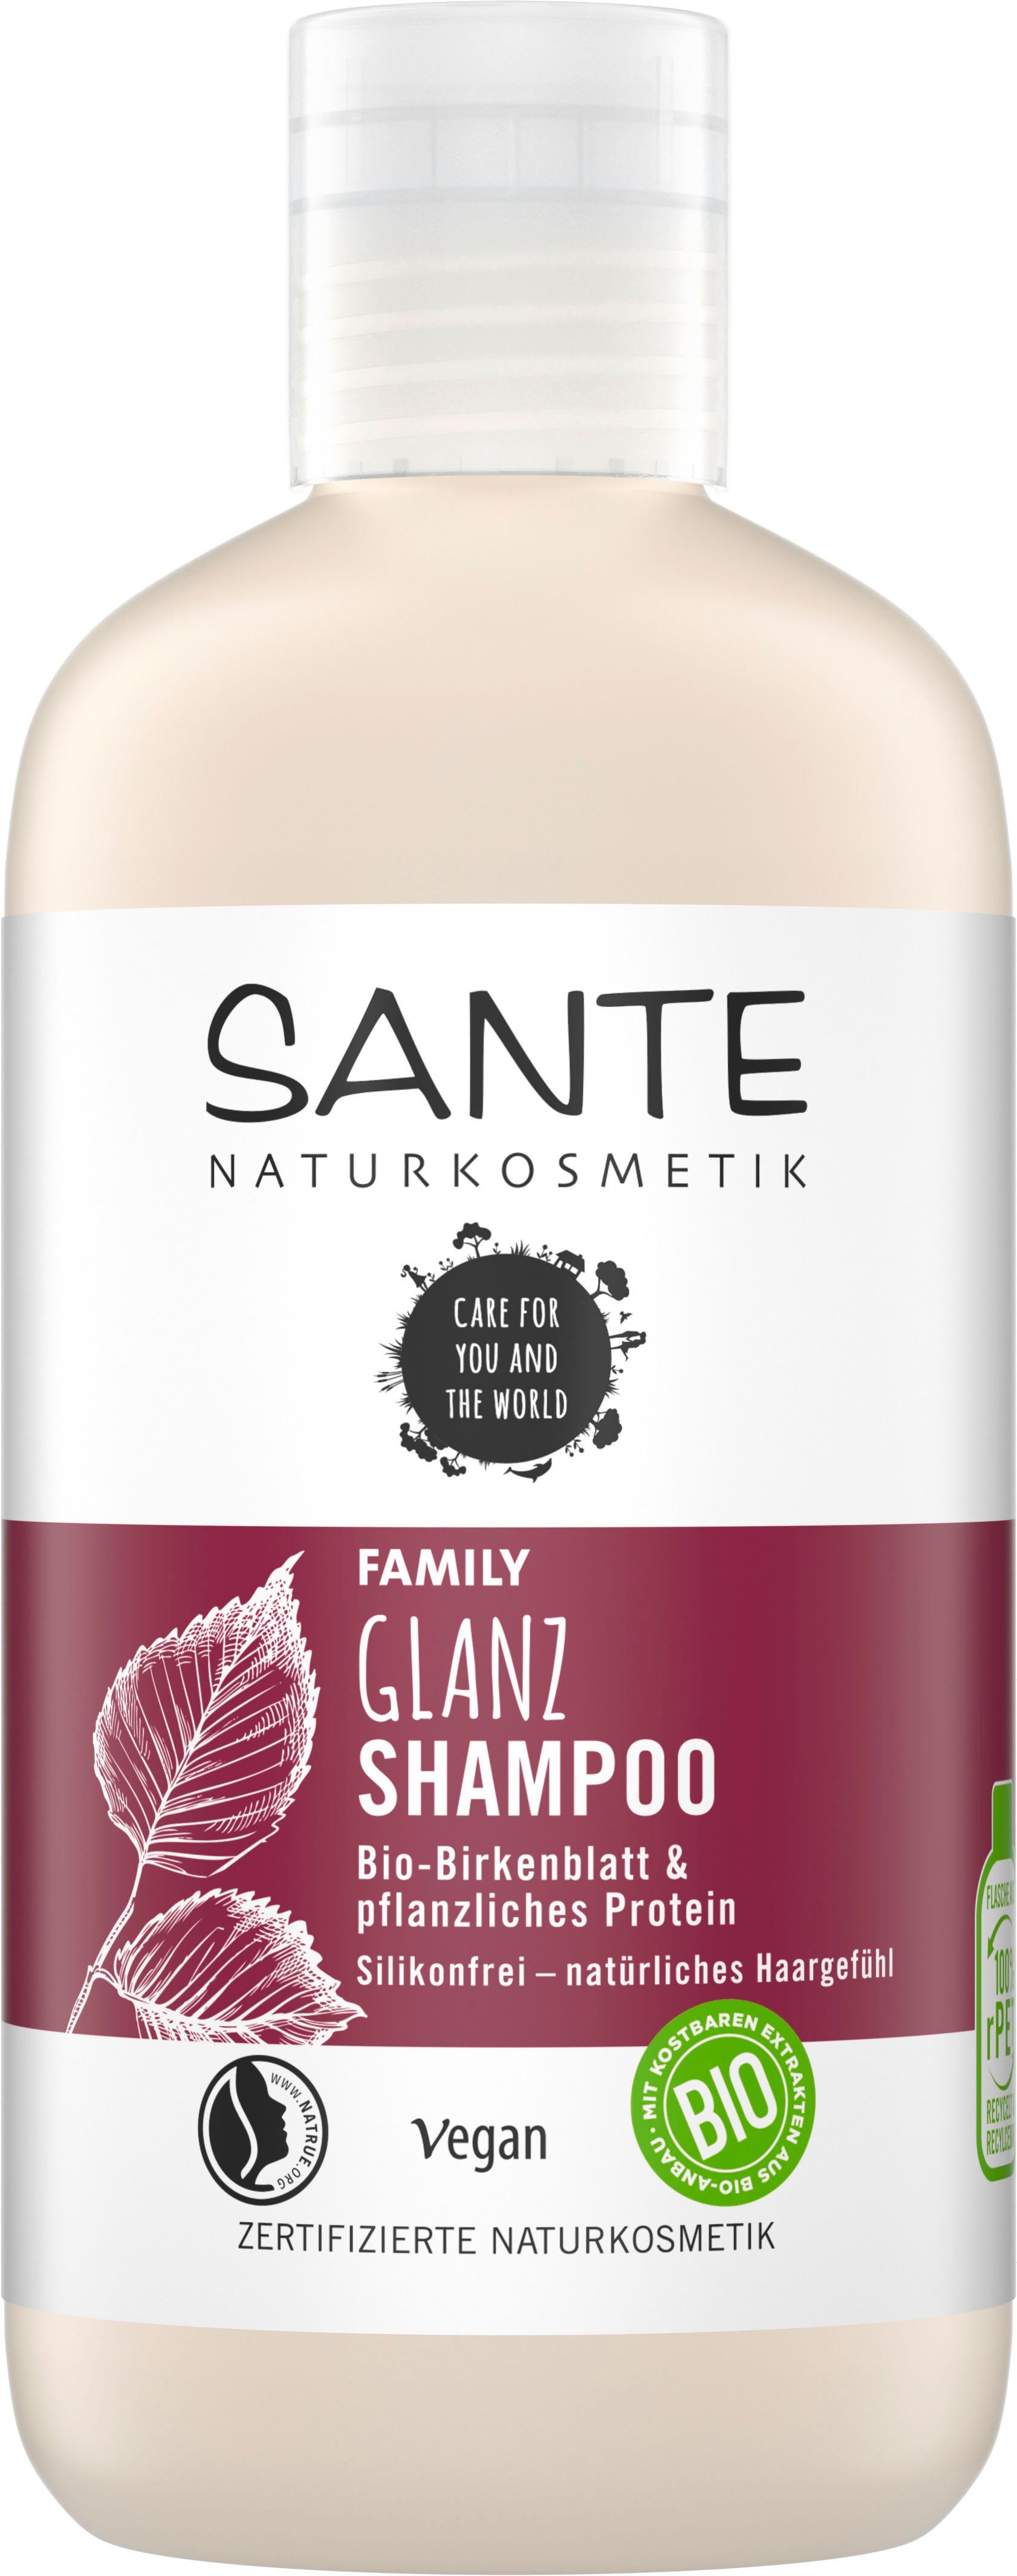 Glanz Shampoo SANTE FAMILY Haarshampoo